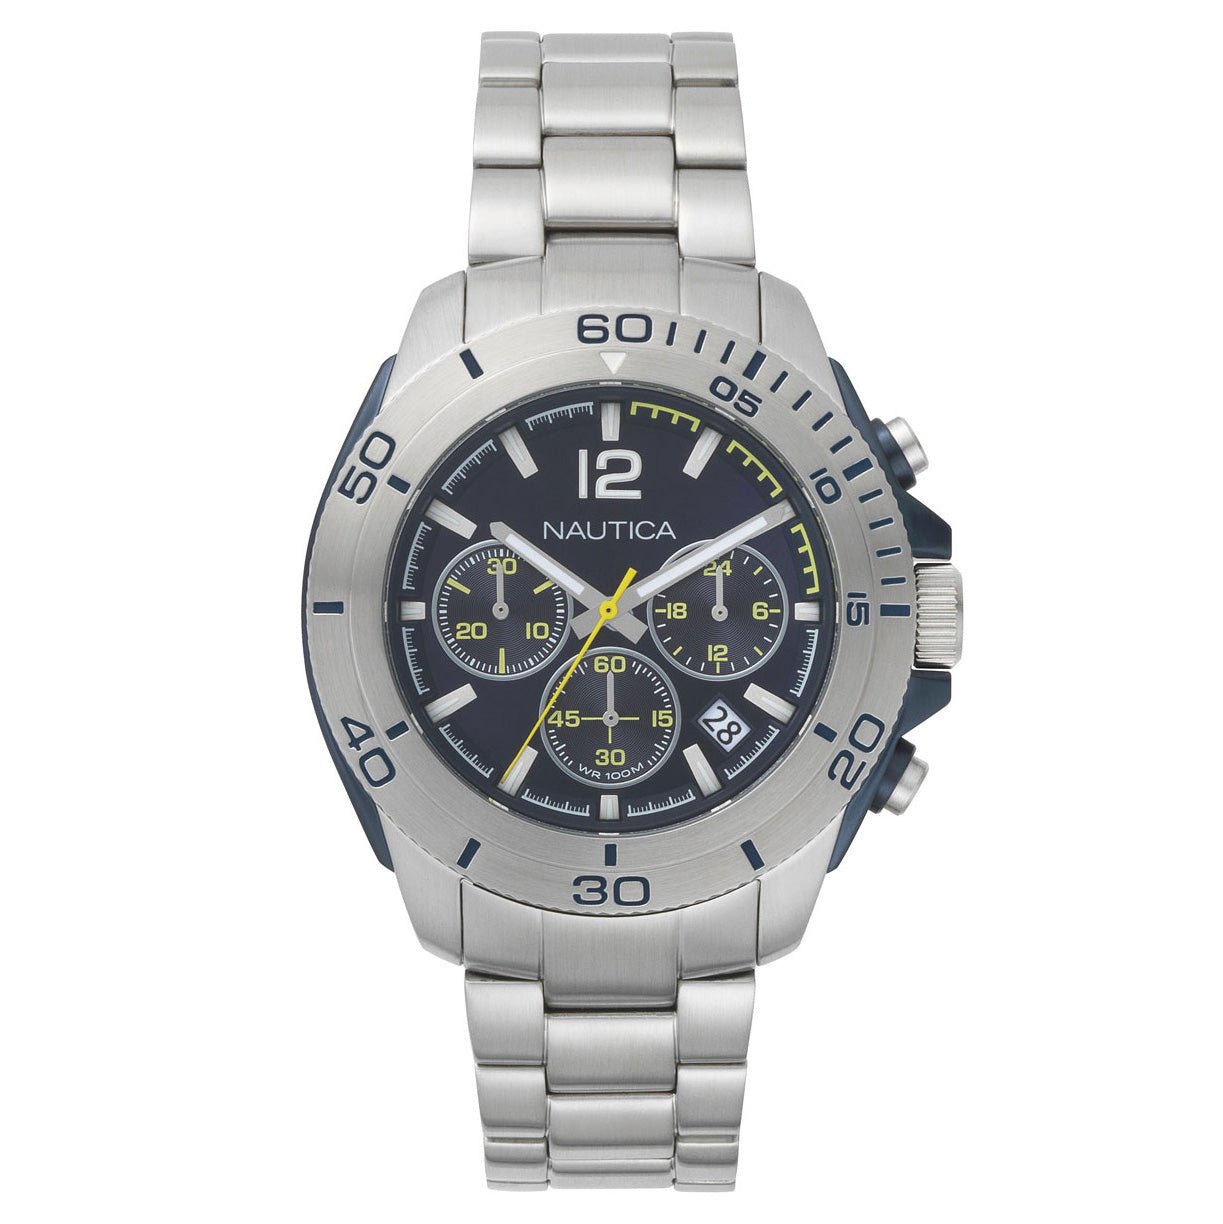 Nautica Men's Watch Chronograph Andover Silver NAPADR004 - Watches & Crystals